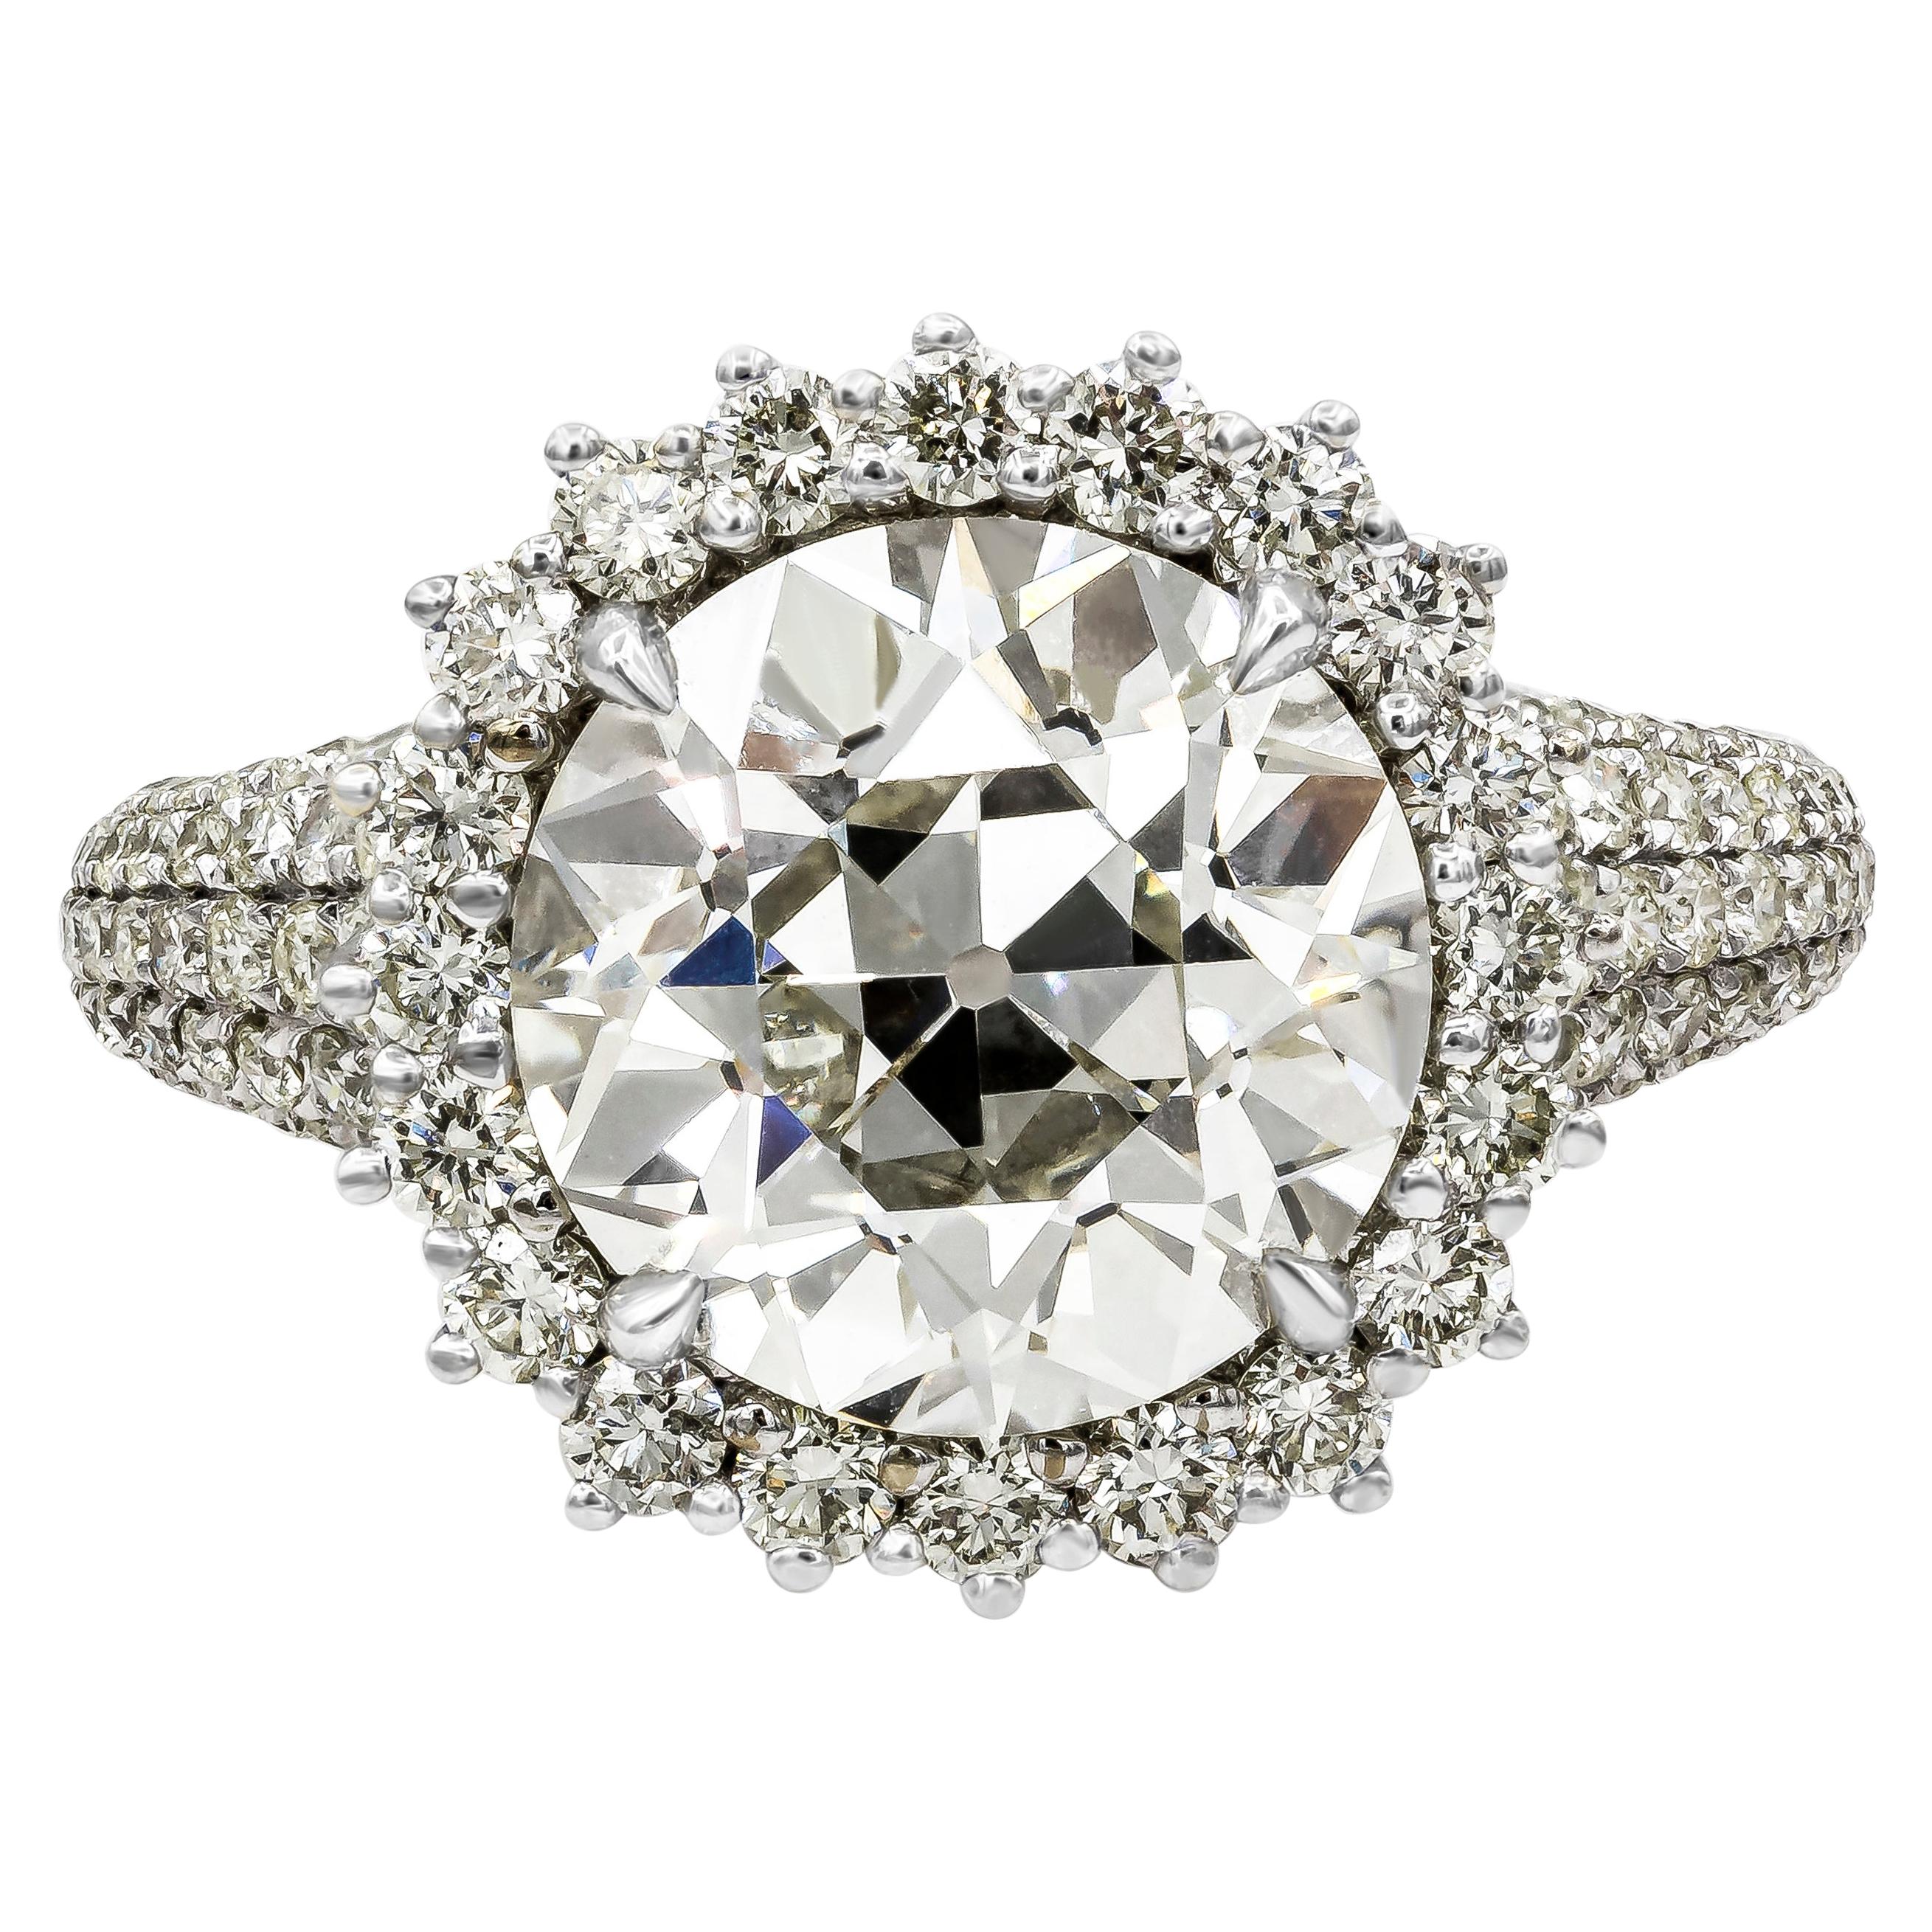 Roman Malakov GIA Certified 5.56 Carats Old European Cut Diamond Engagement Ring For Sale